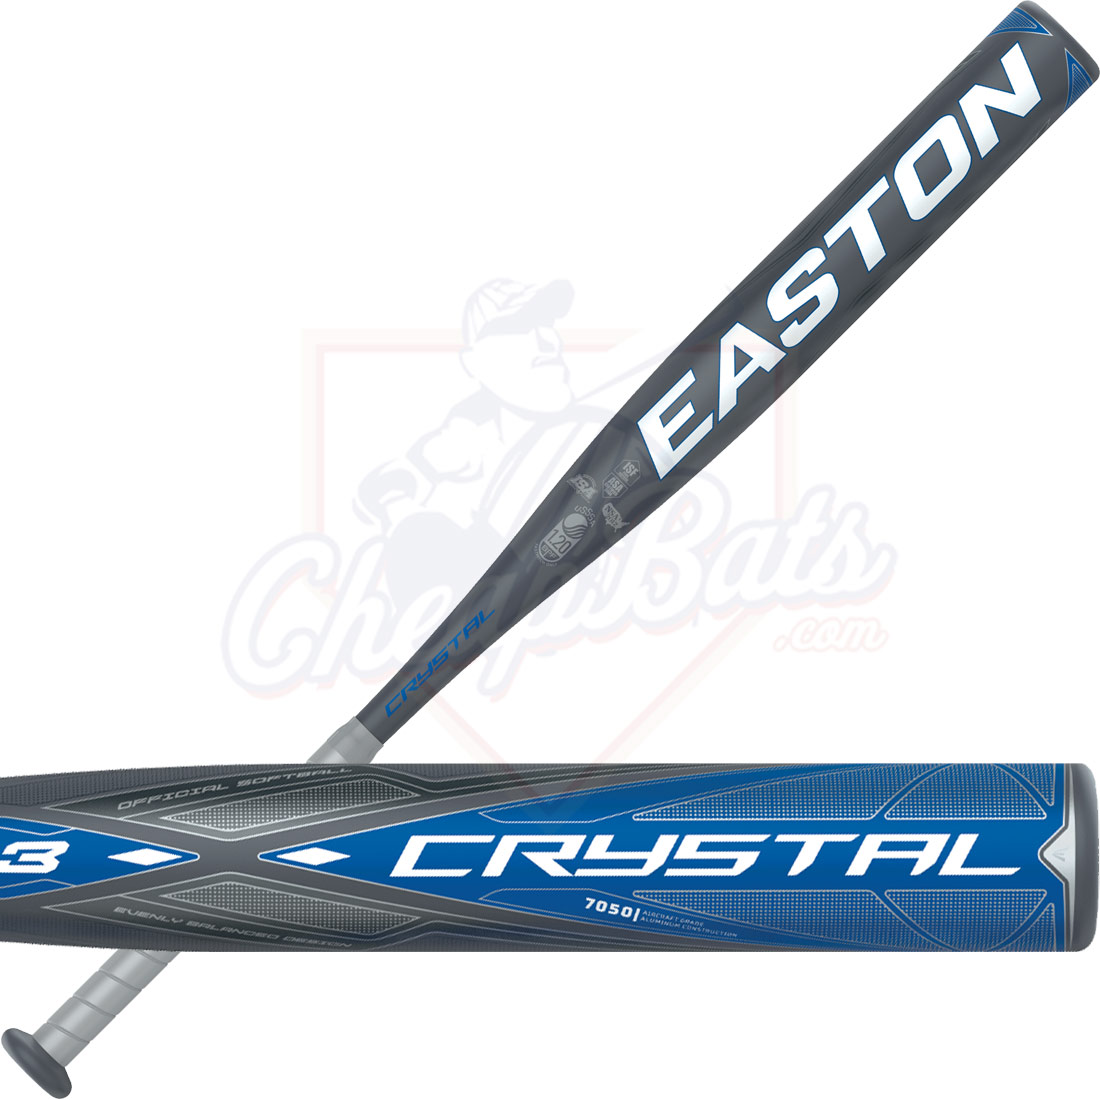 Easton Crystal 2020 Alloy Fastpitch Softball Bat -13 FP20CRY 